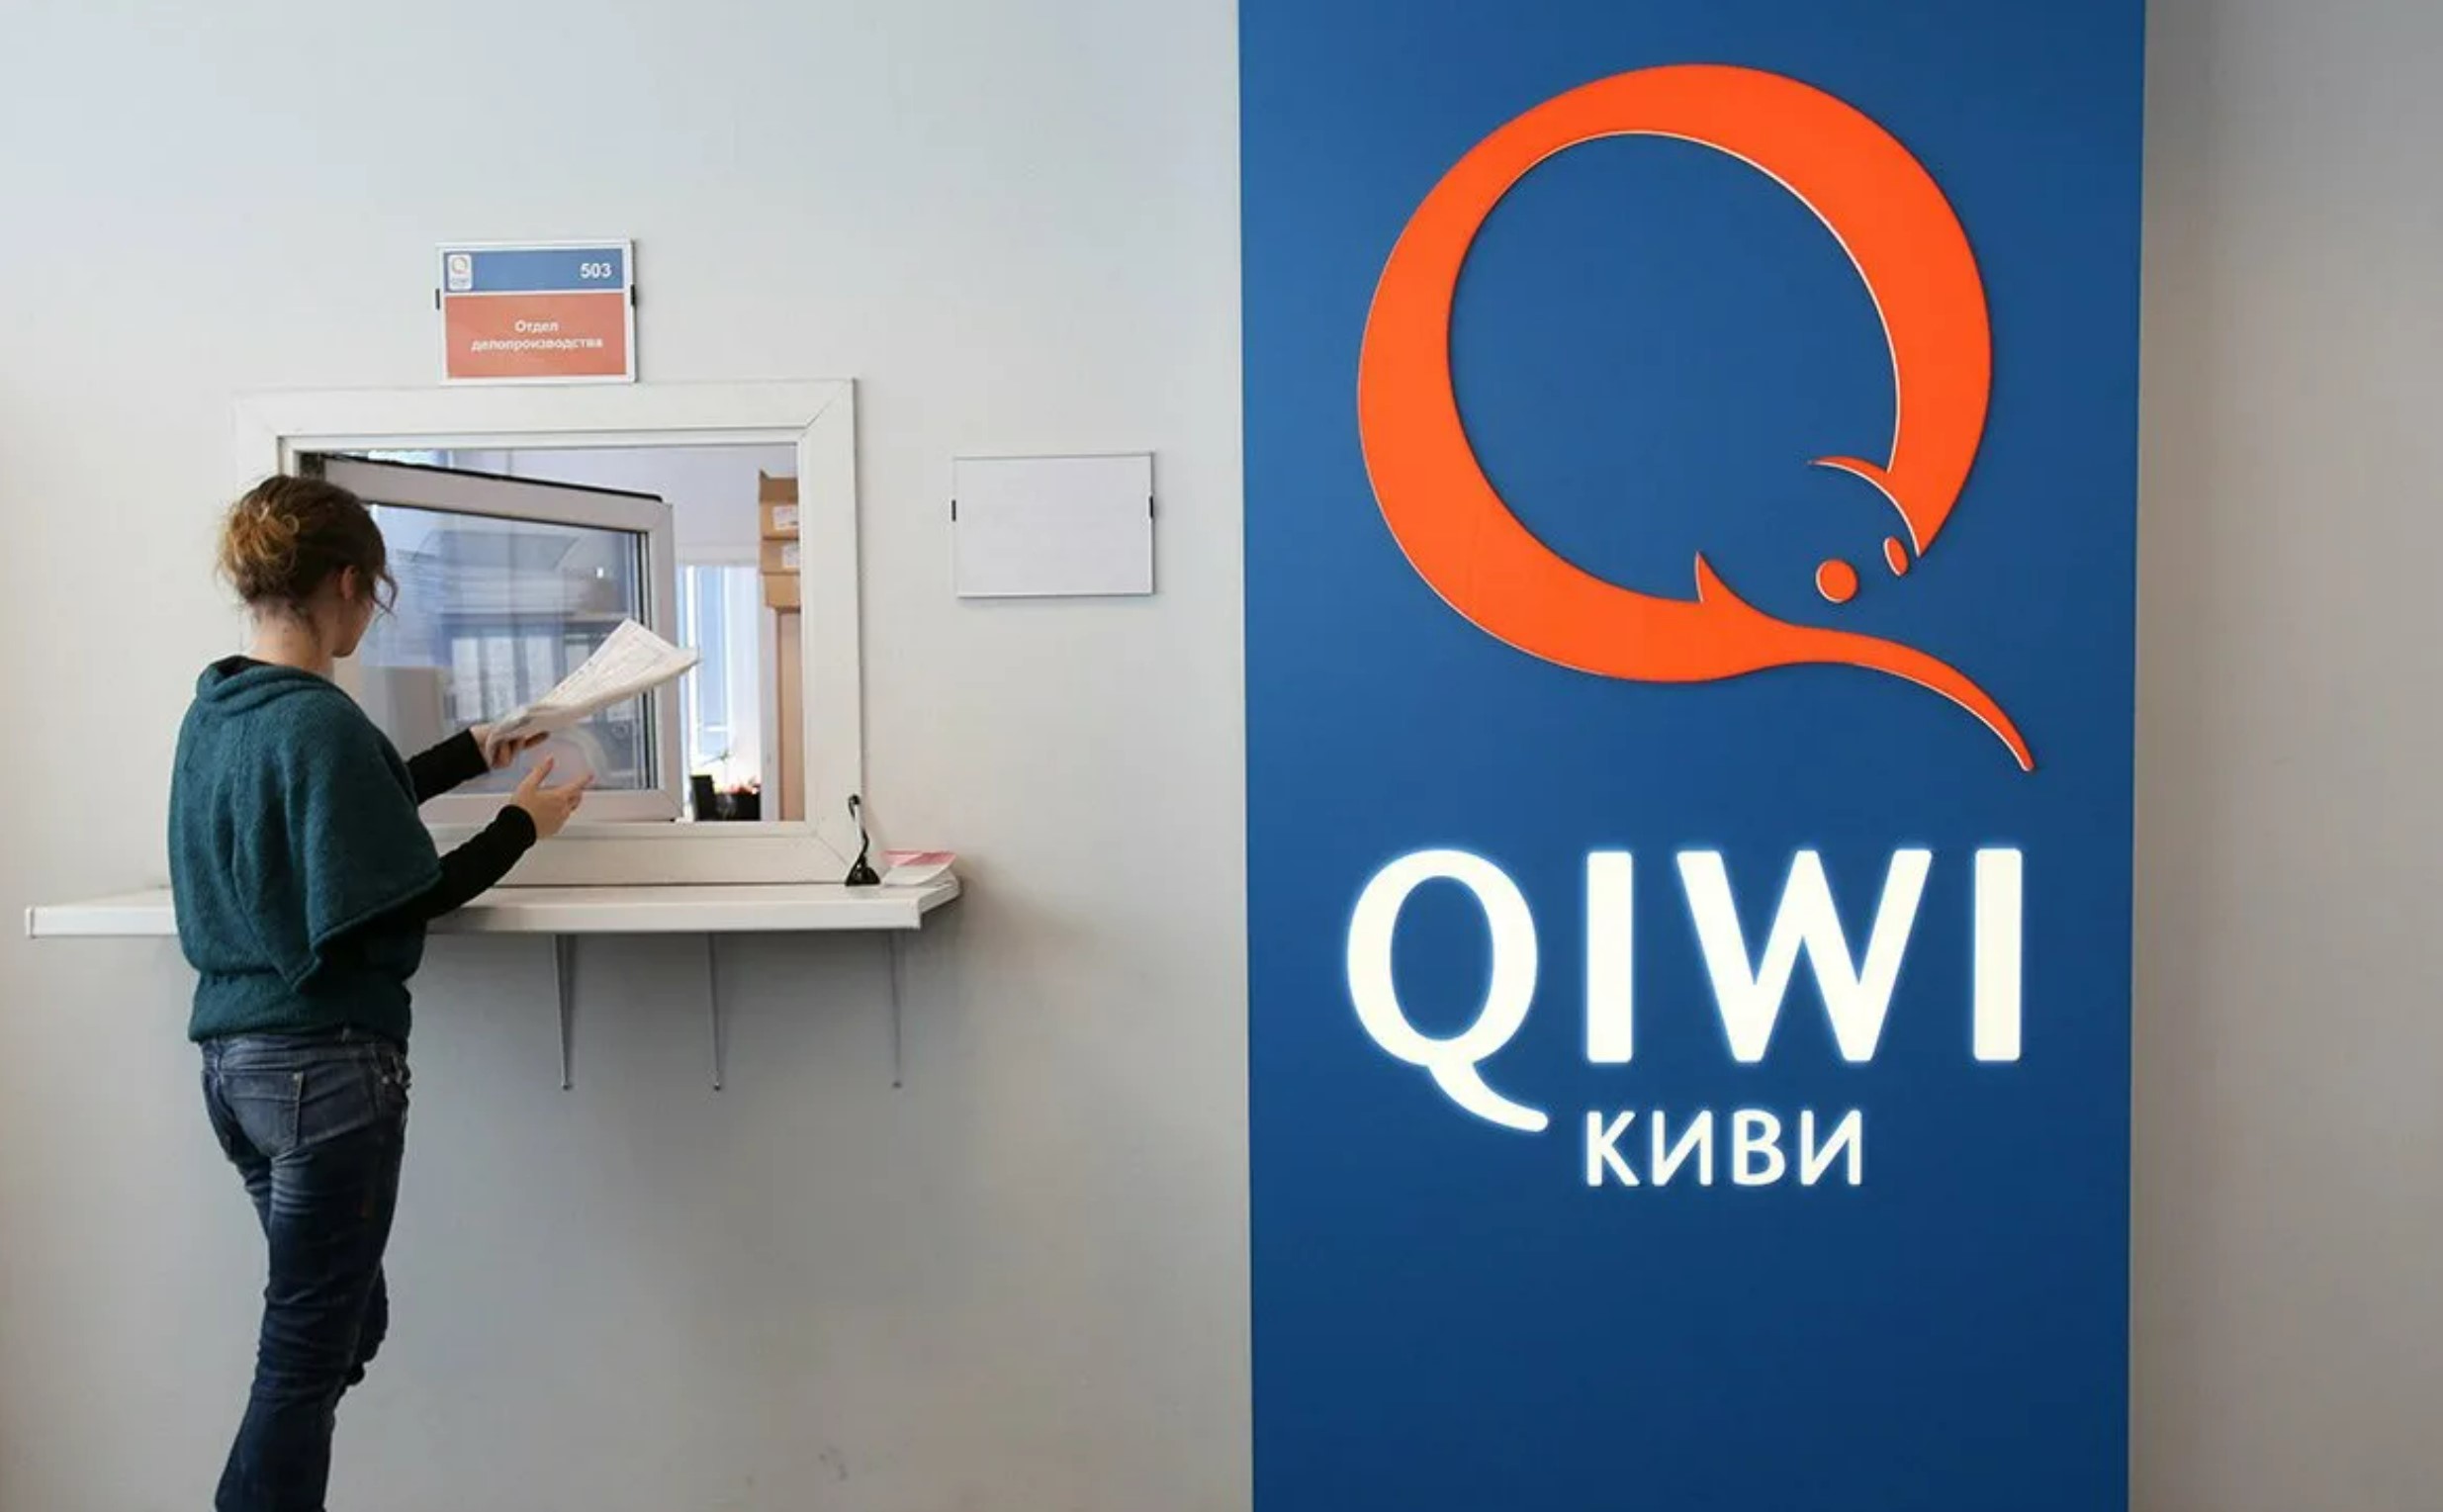 Qiwi google. QIWI банк. Киви банк» (QIWI. QIWI банк офис. Киви банк лого.